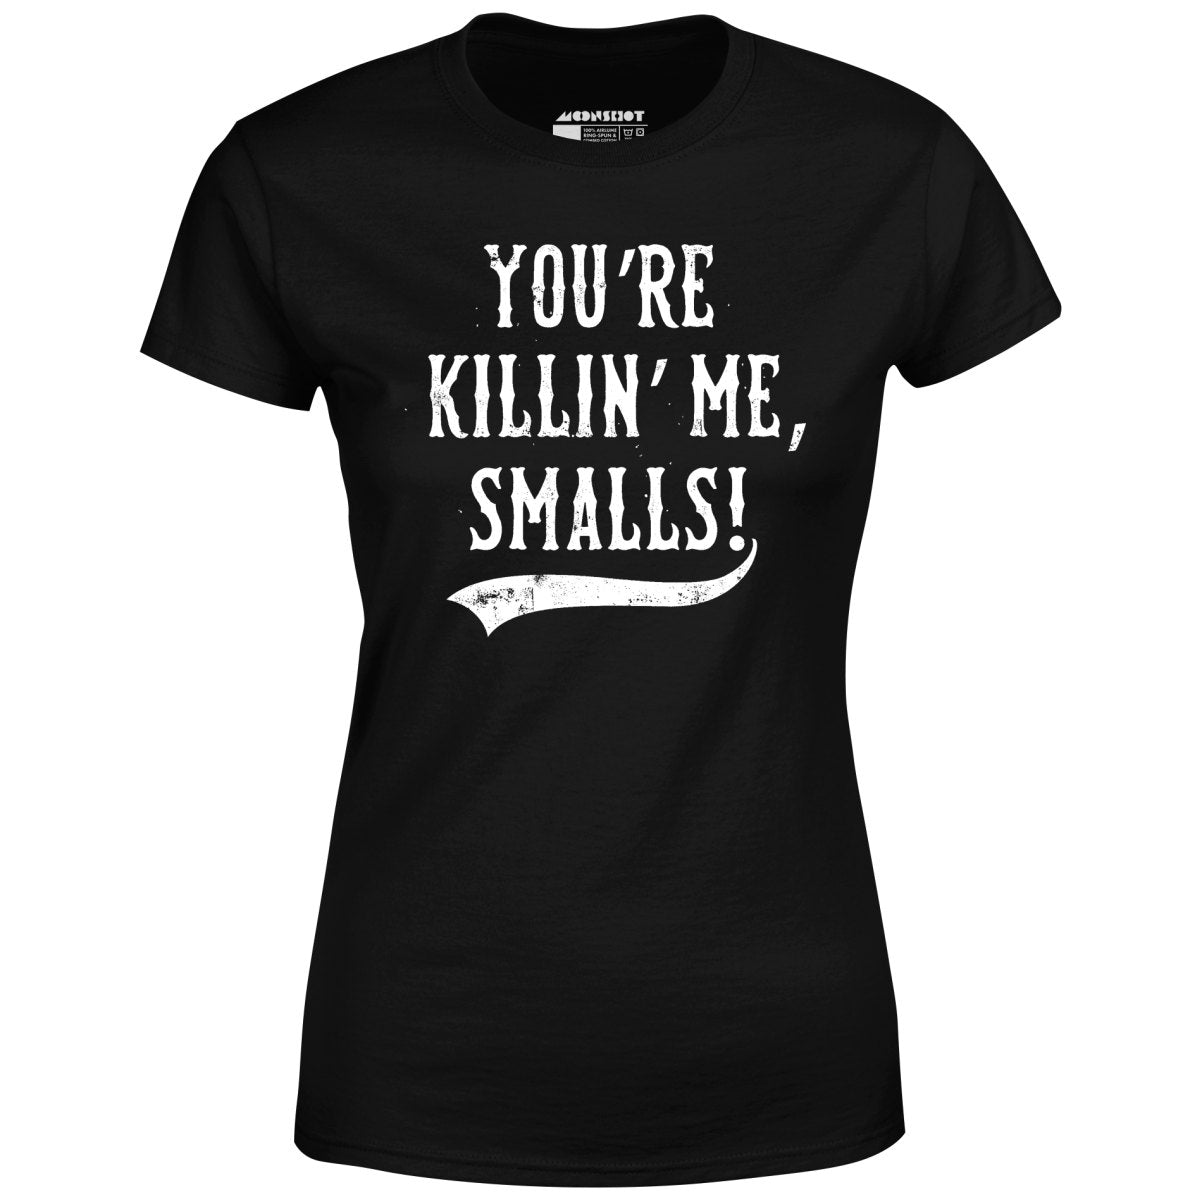 You're Killin' Me, Smalls! - Women's T-Shirt